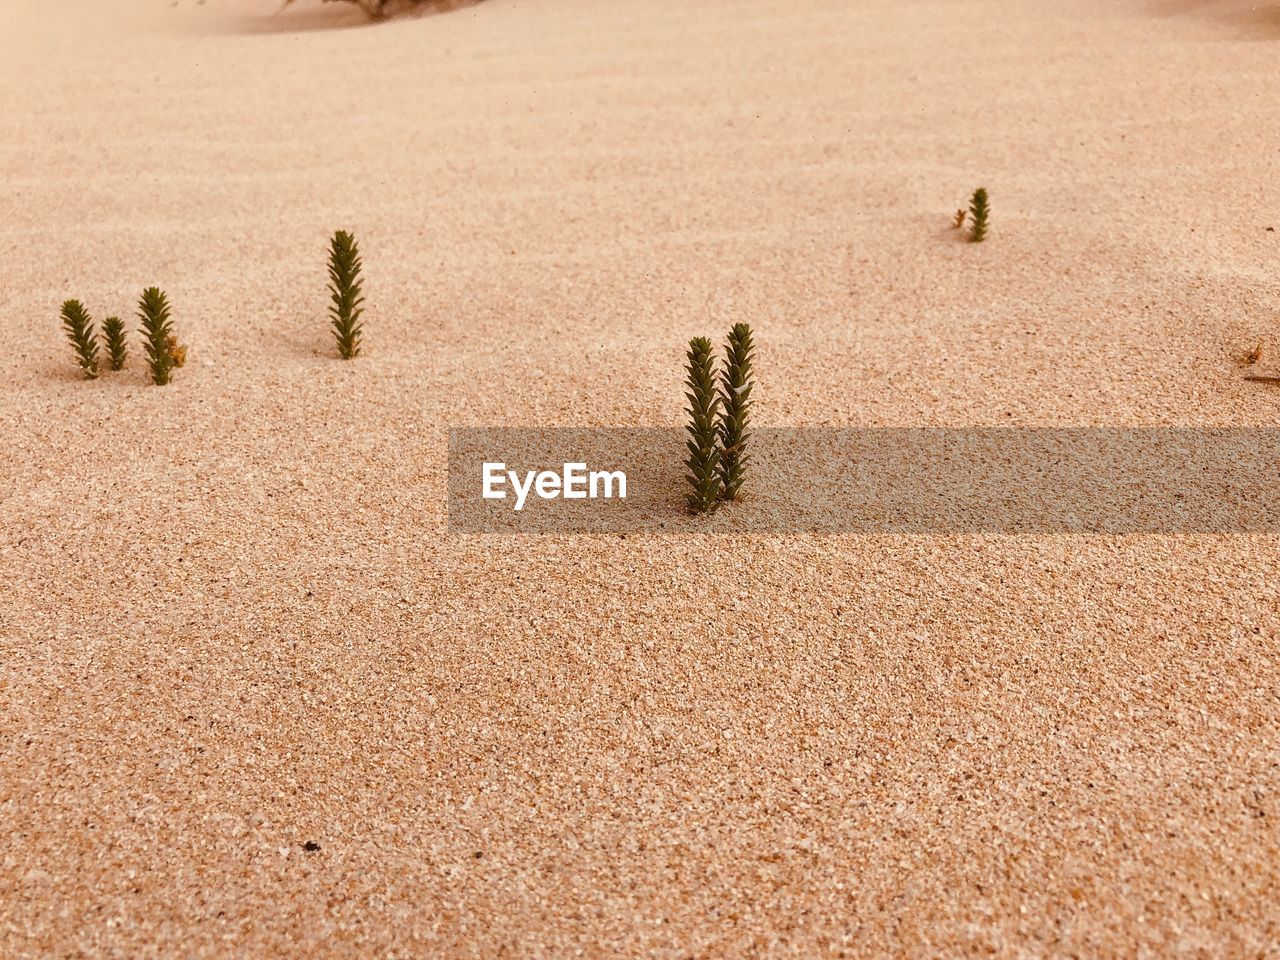 High angle view of plants growing on sand